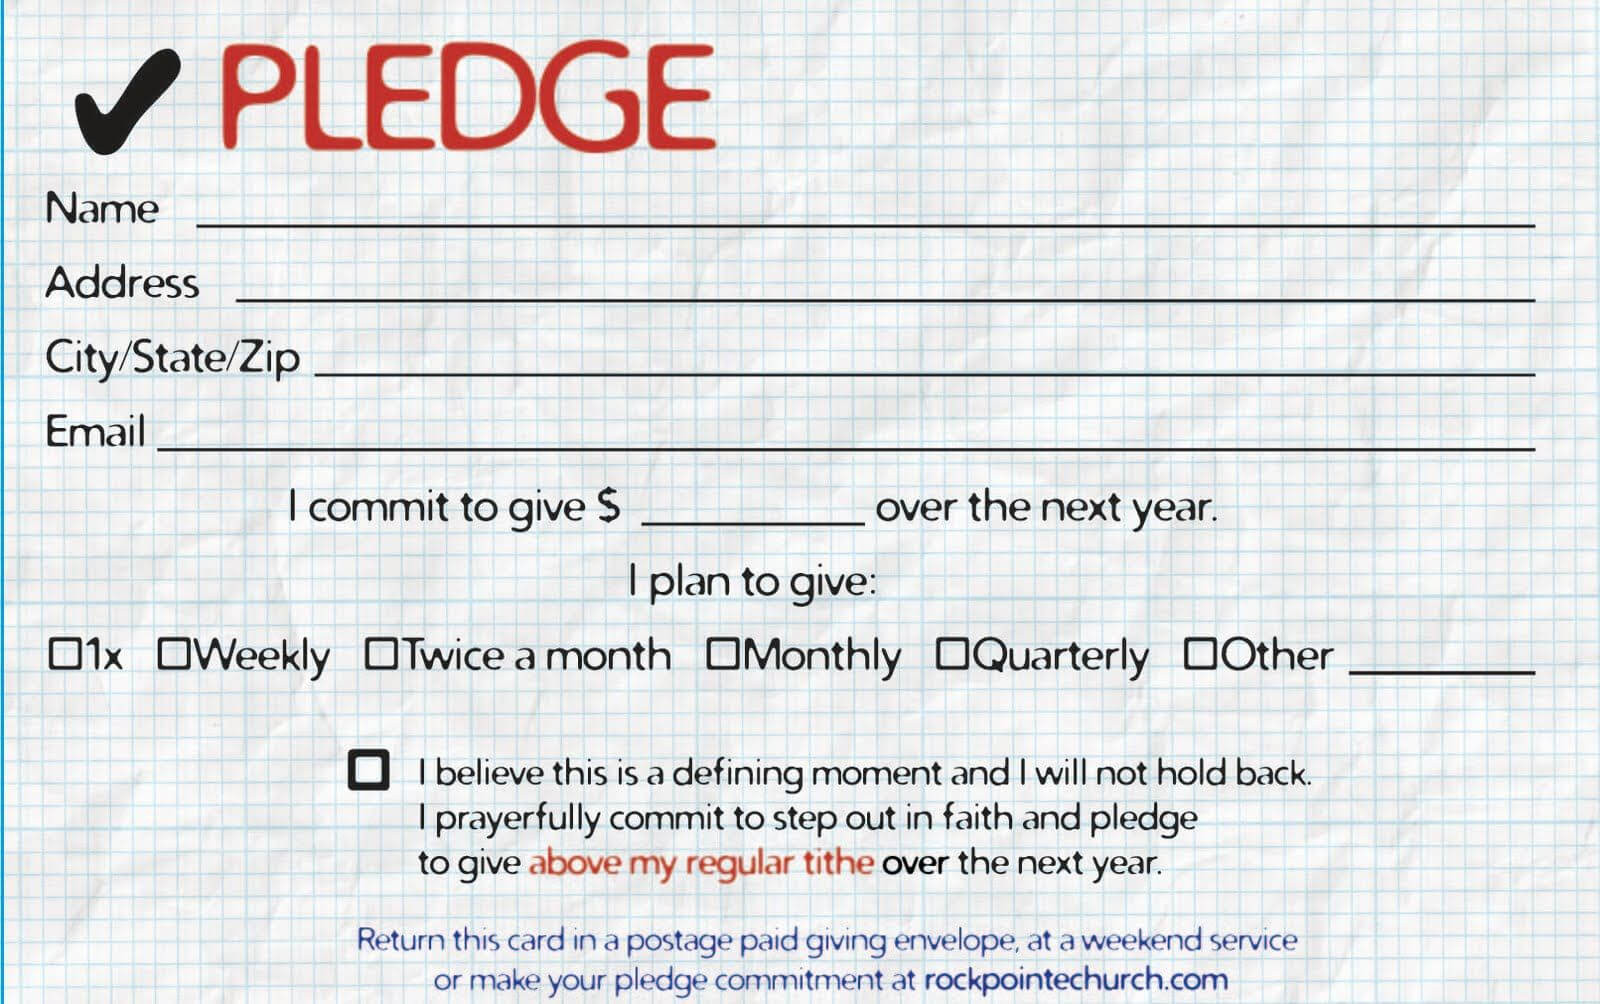 Pledge Cards For Churches | Pledge Card Templates | Card In Fundraising Pledge Card Template